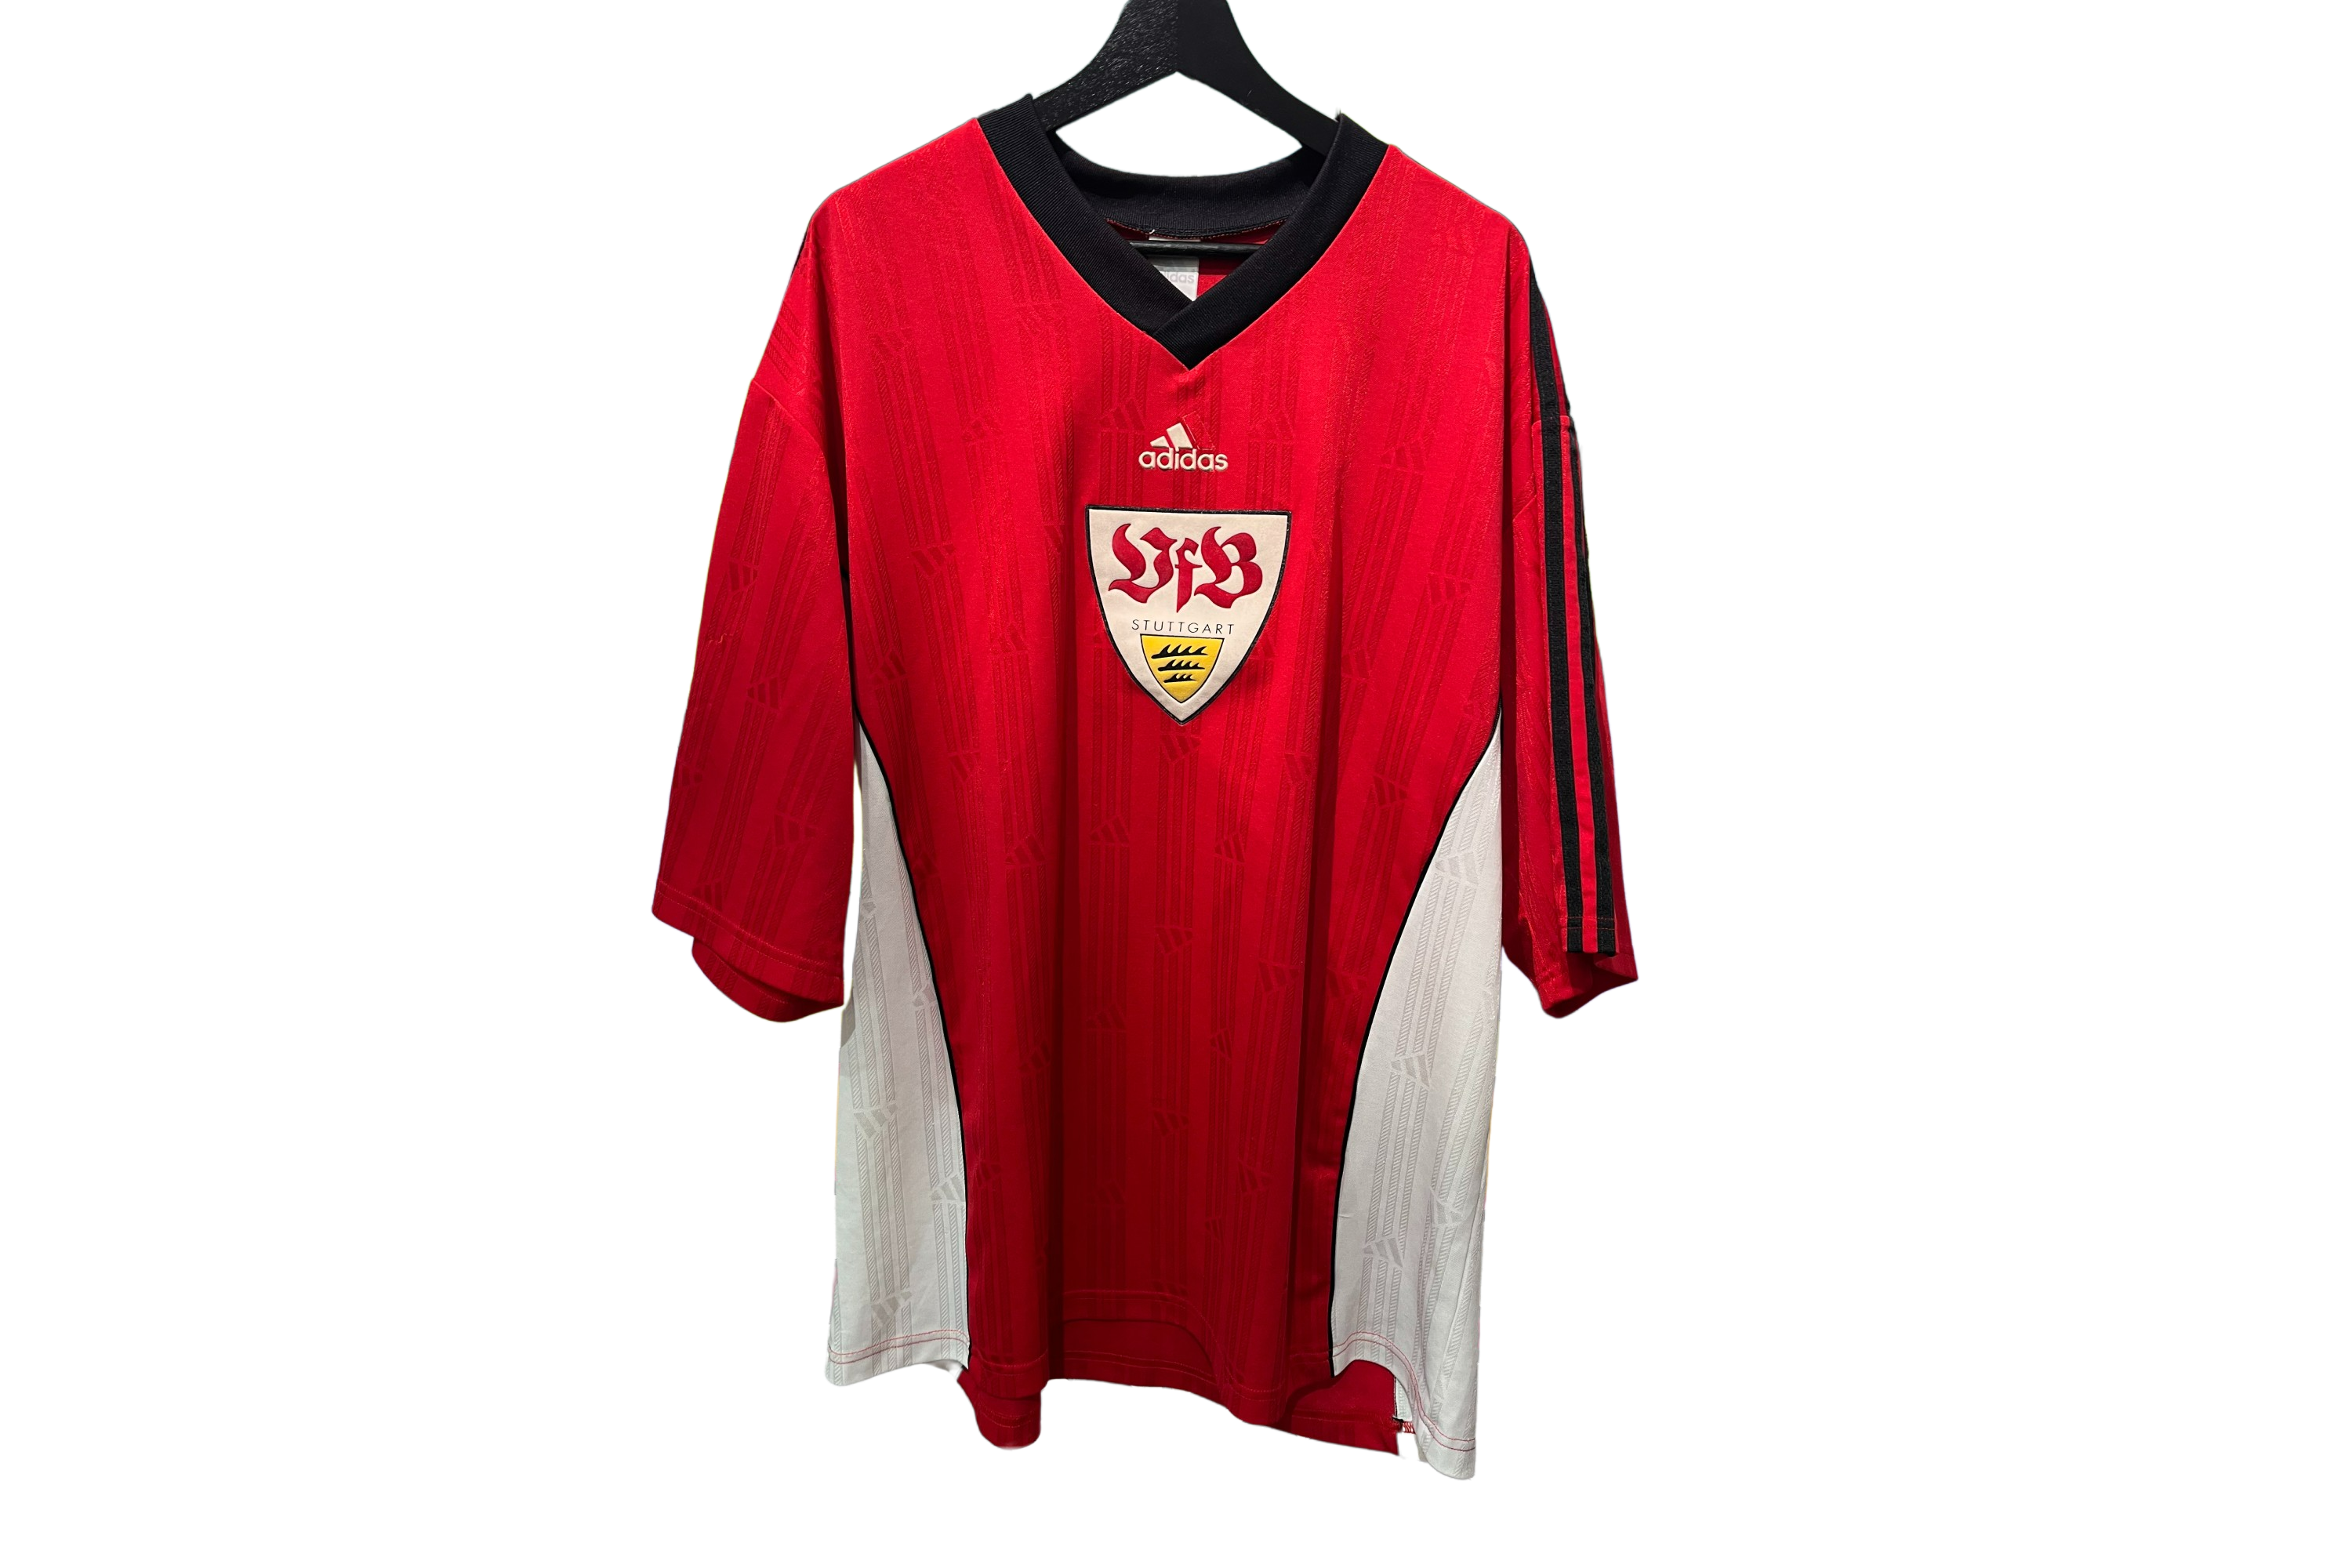 Adidas - Stuttgart 1999/00 Training Football Shirt